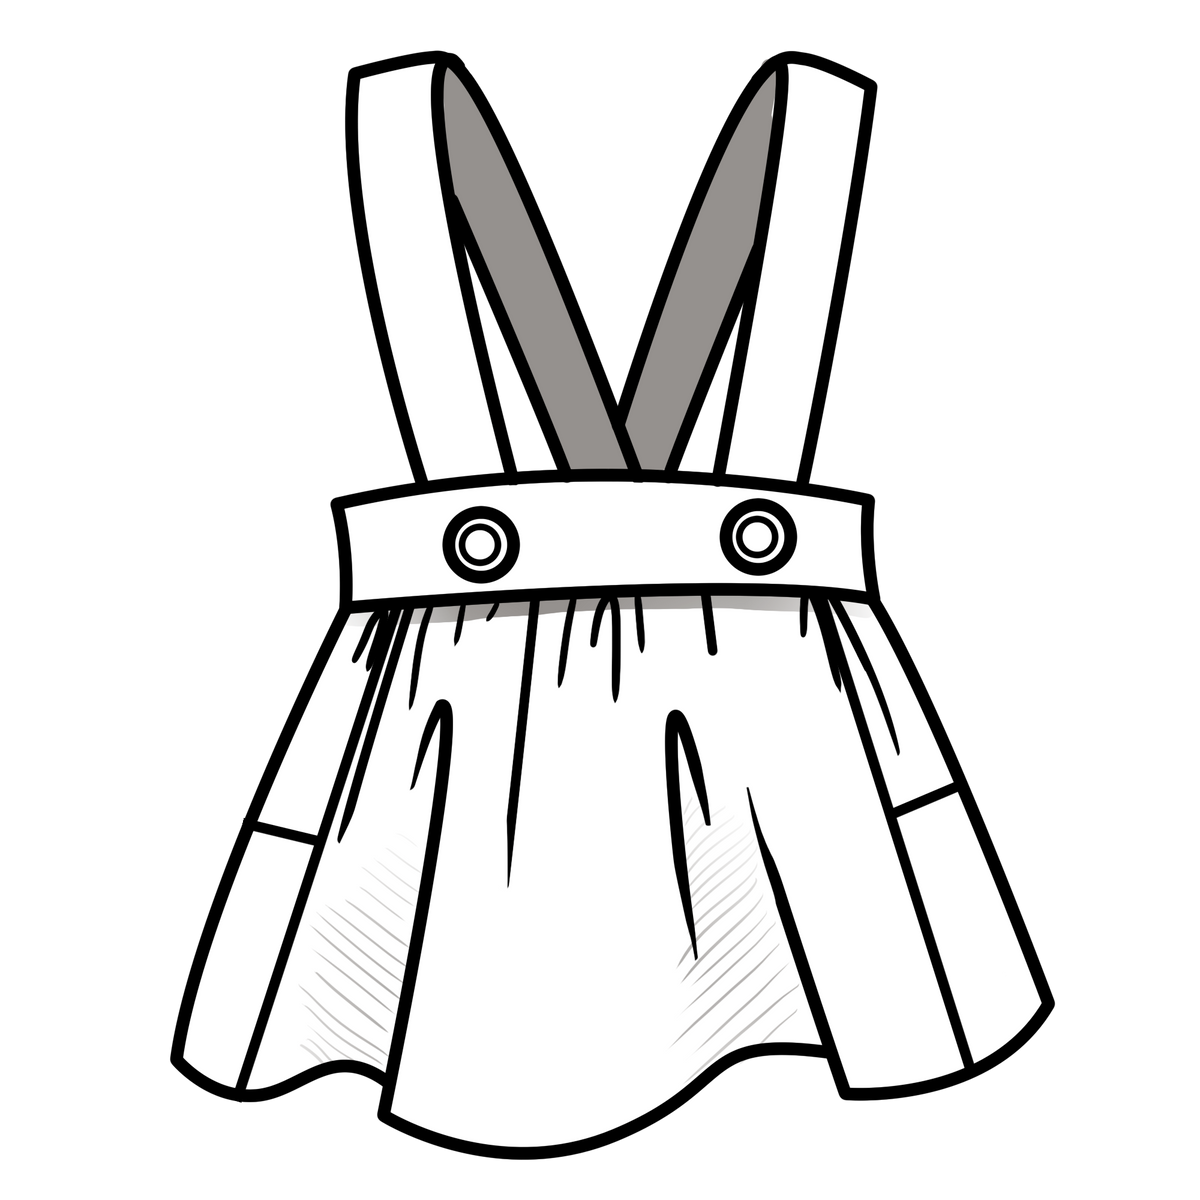 ‘Bunny Big Ears’ Savannah Suspender Skirt - Ready to Ship